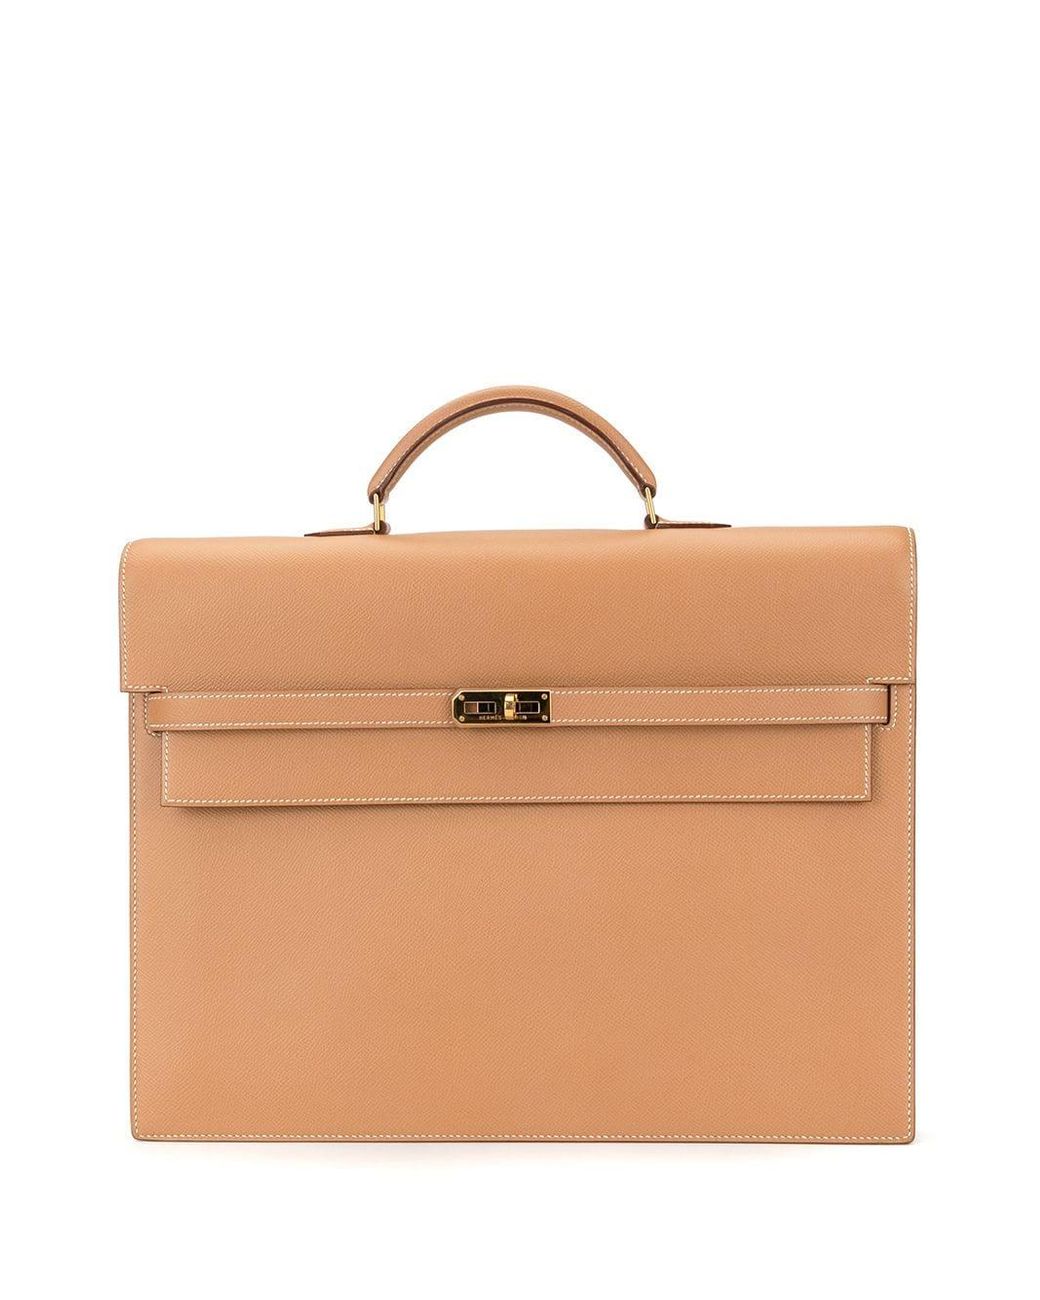 Hermès Pre-Owned Kelly Depeche 38 Briefcase in Brown